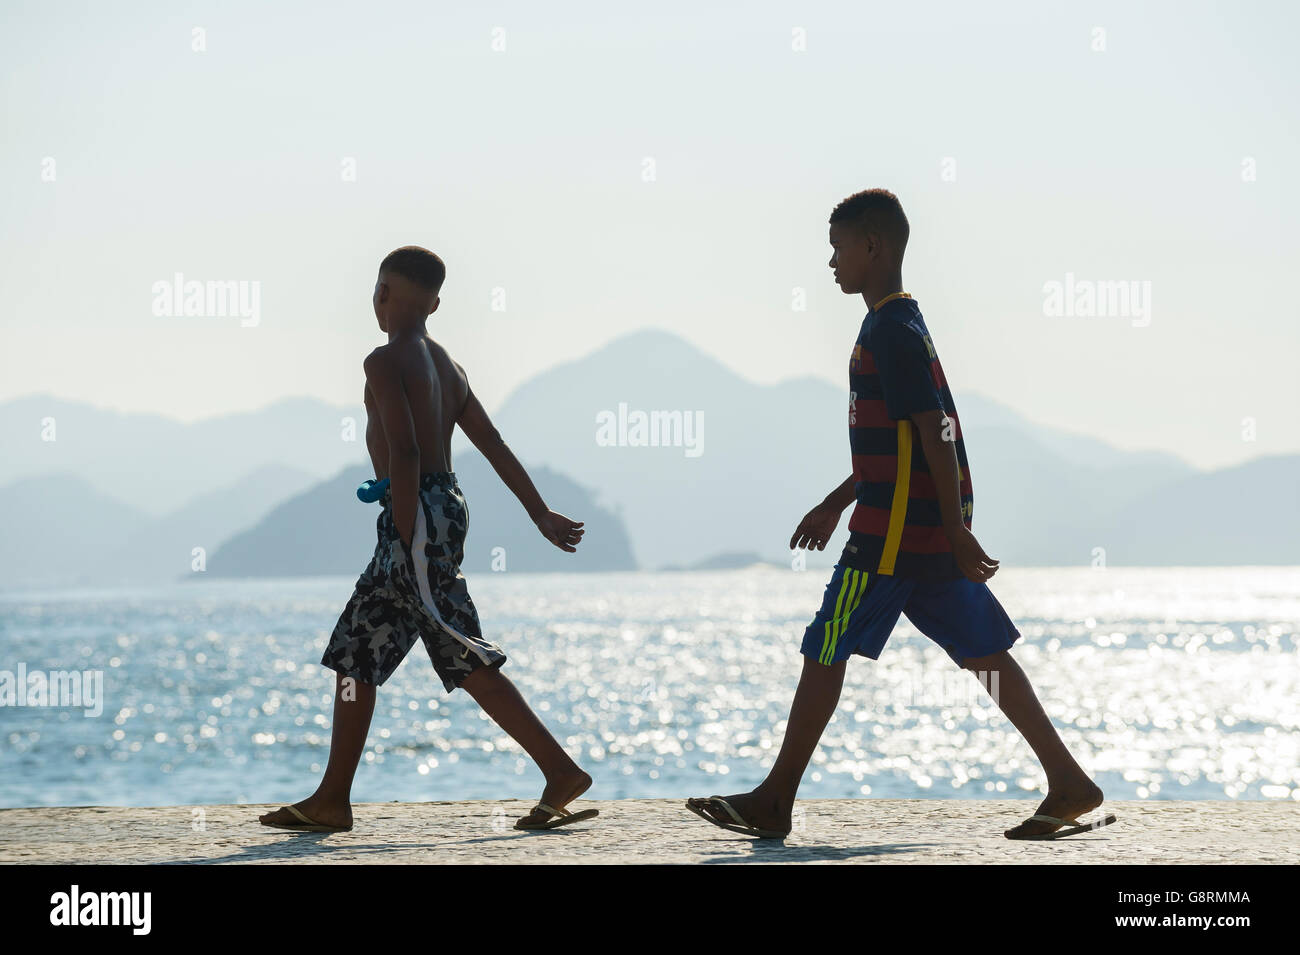 RIO DE JANEIRO - APRIL 3, 2016: Young Brazilians walk in silhouette on the boardwalk at Copacabana Beach on a misty morning. Stock Photo